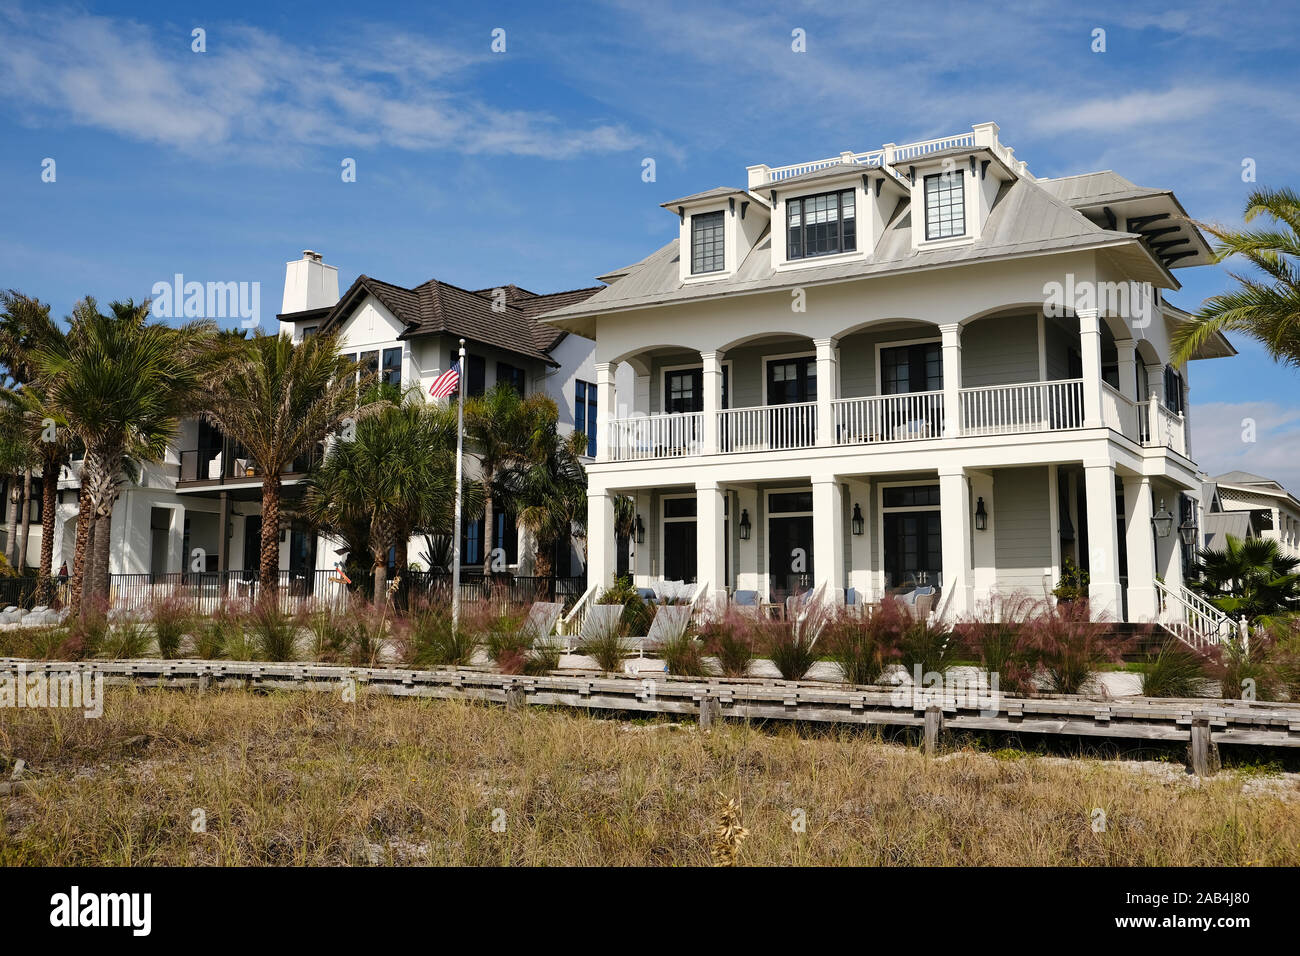 Large beautiful house or home on the beach showcasing Florida lifestyle living in Grayton Beach Florida, USA. Stock Photo